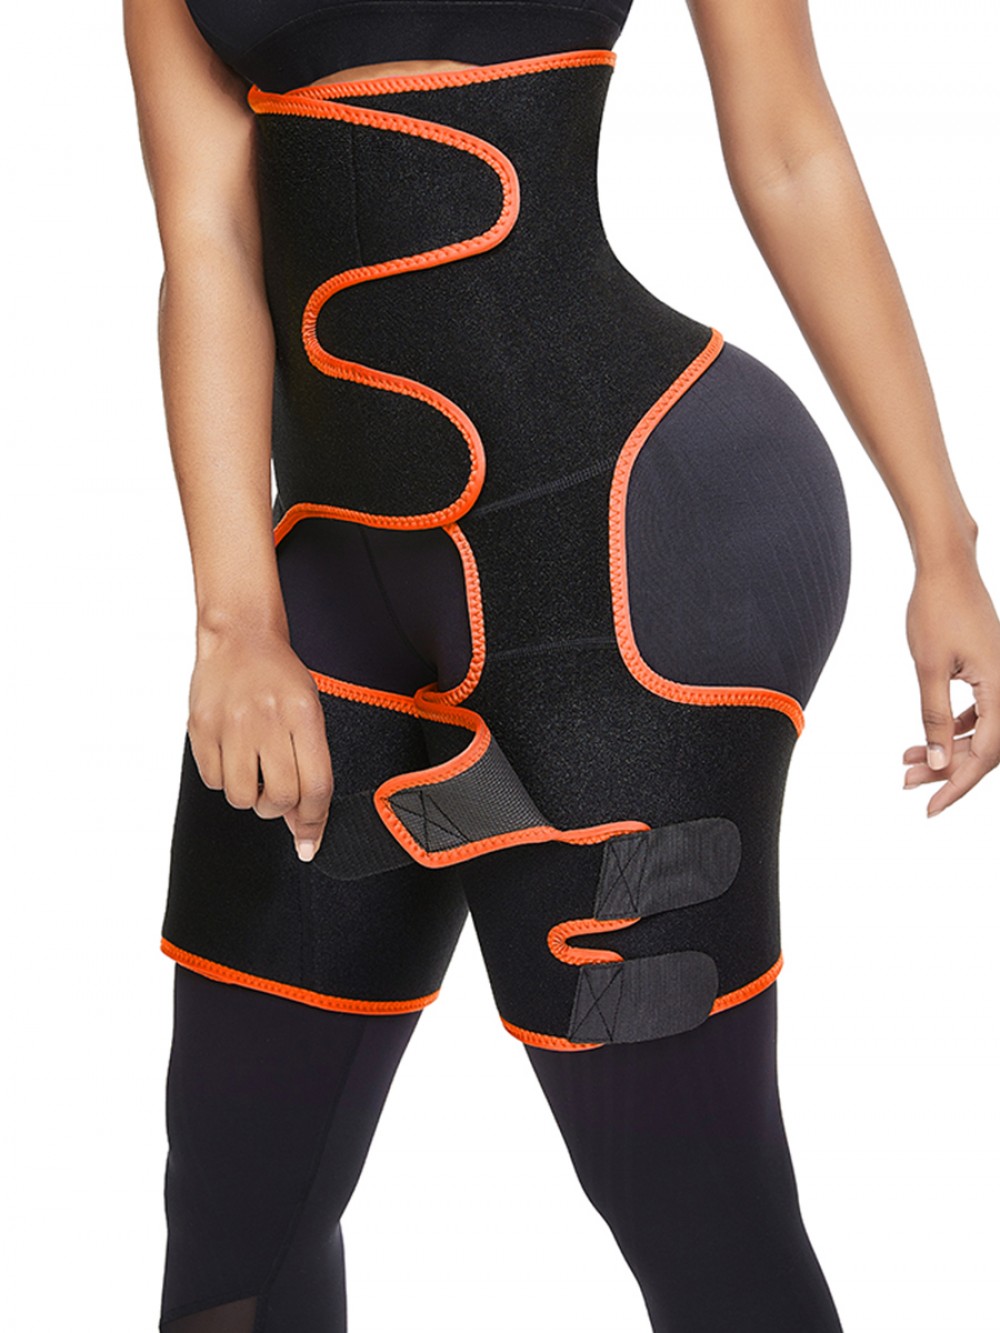 Orange Sticker High Waist Neoprene Thigh Shaper For Weight Loss